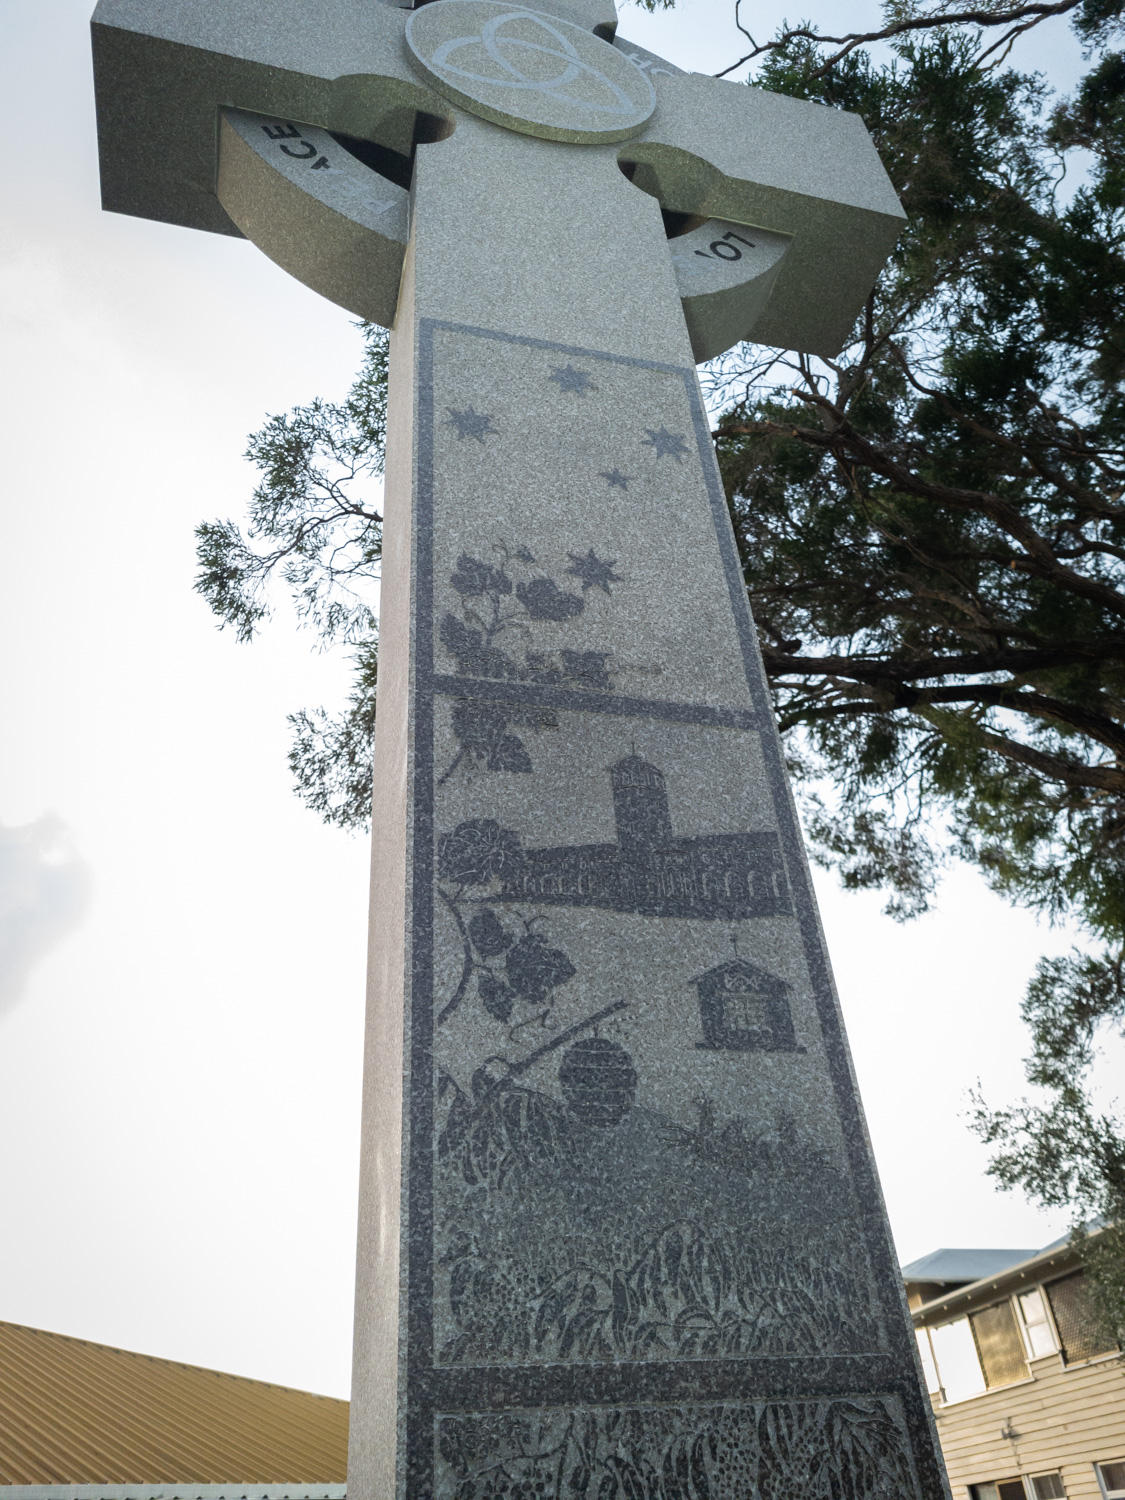 Panel artwork on the Banyo Cross.